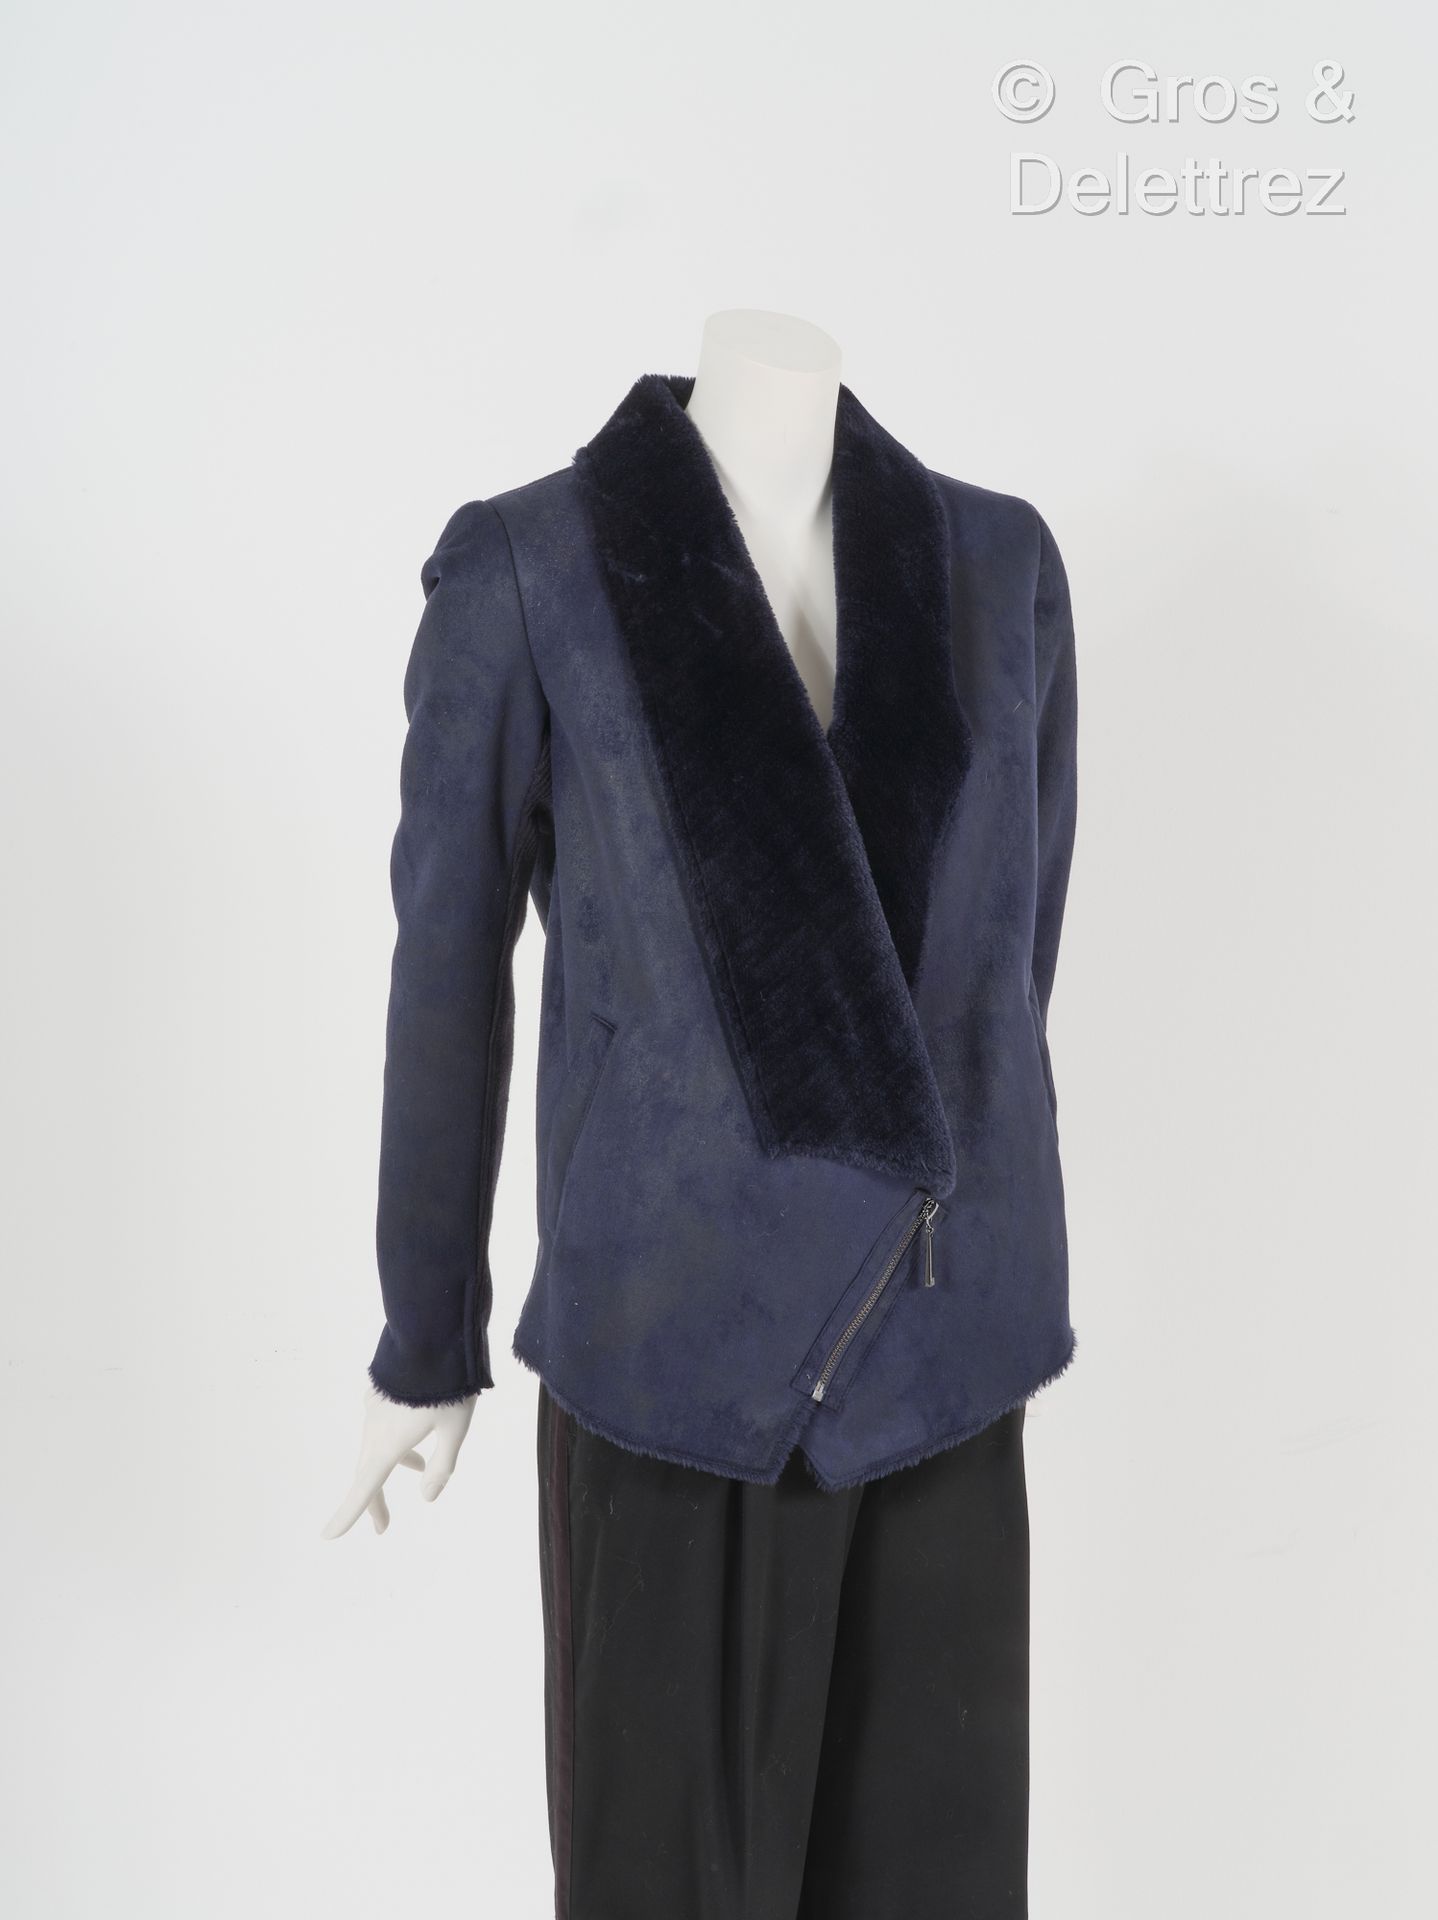 George RECH 深蓝色复合拉链外套，彩色人造毛皮披肩领，两个斜插口袋，长袖。大致尺寸为38。